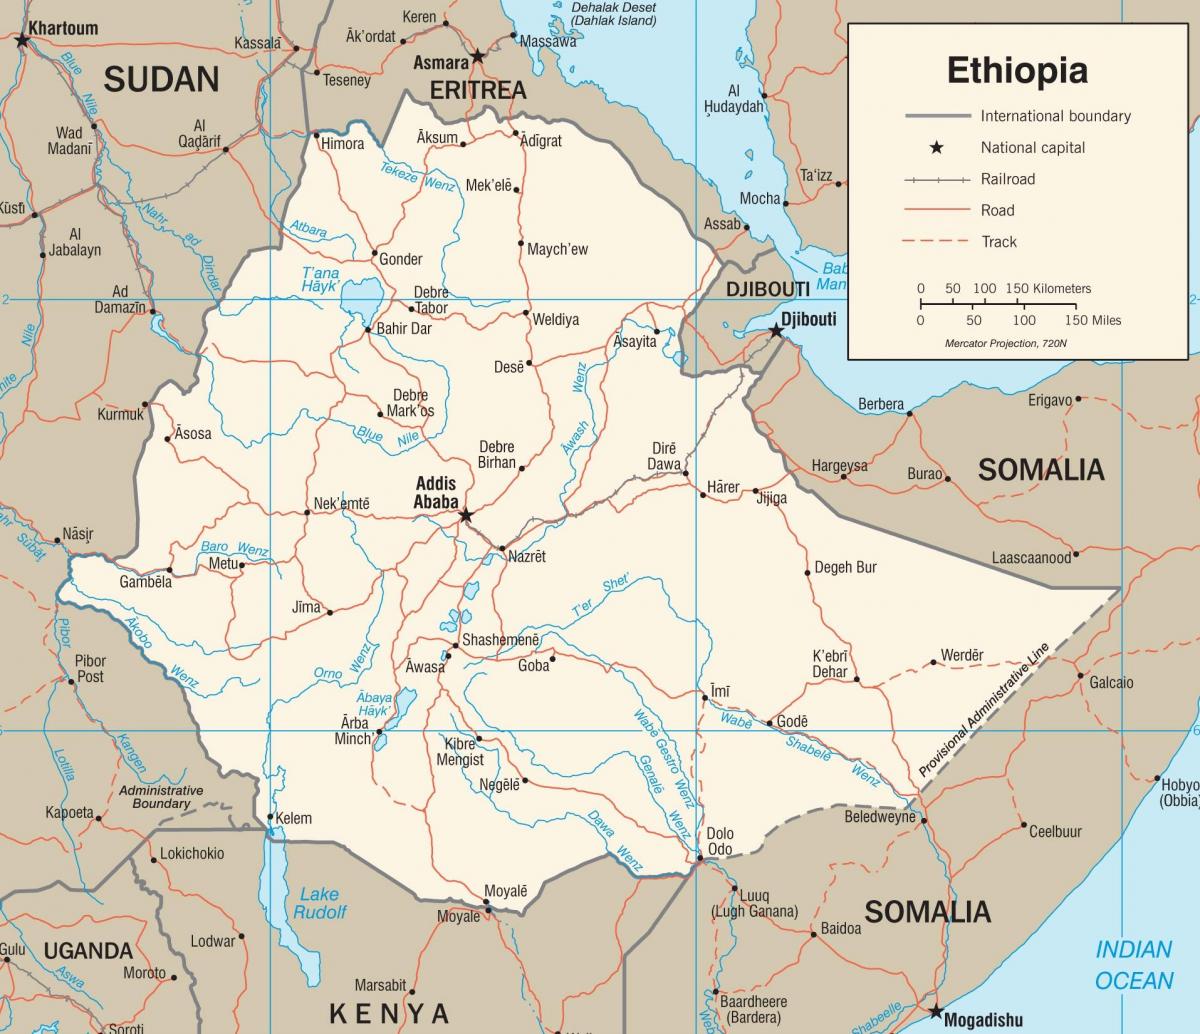 Ethiopian road network map